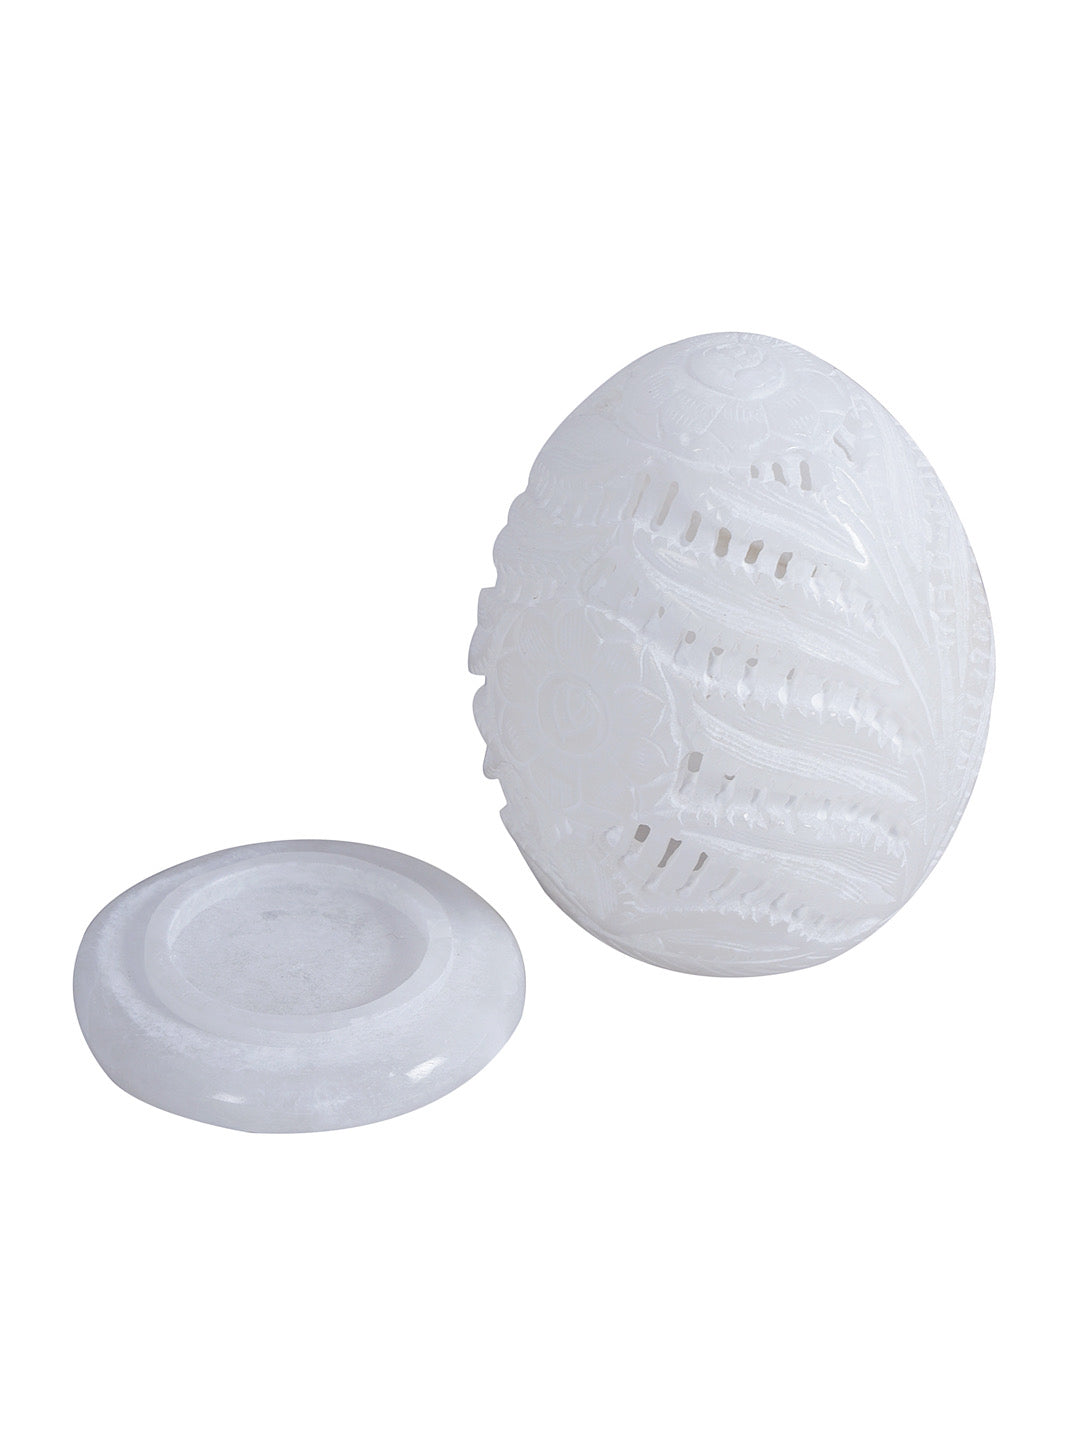 Egg Shaped marble Tealight Holder - Default Title (MARA2214)